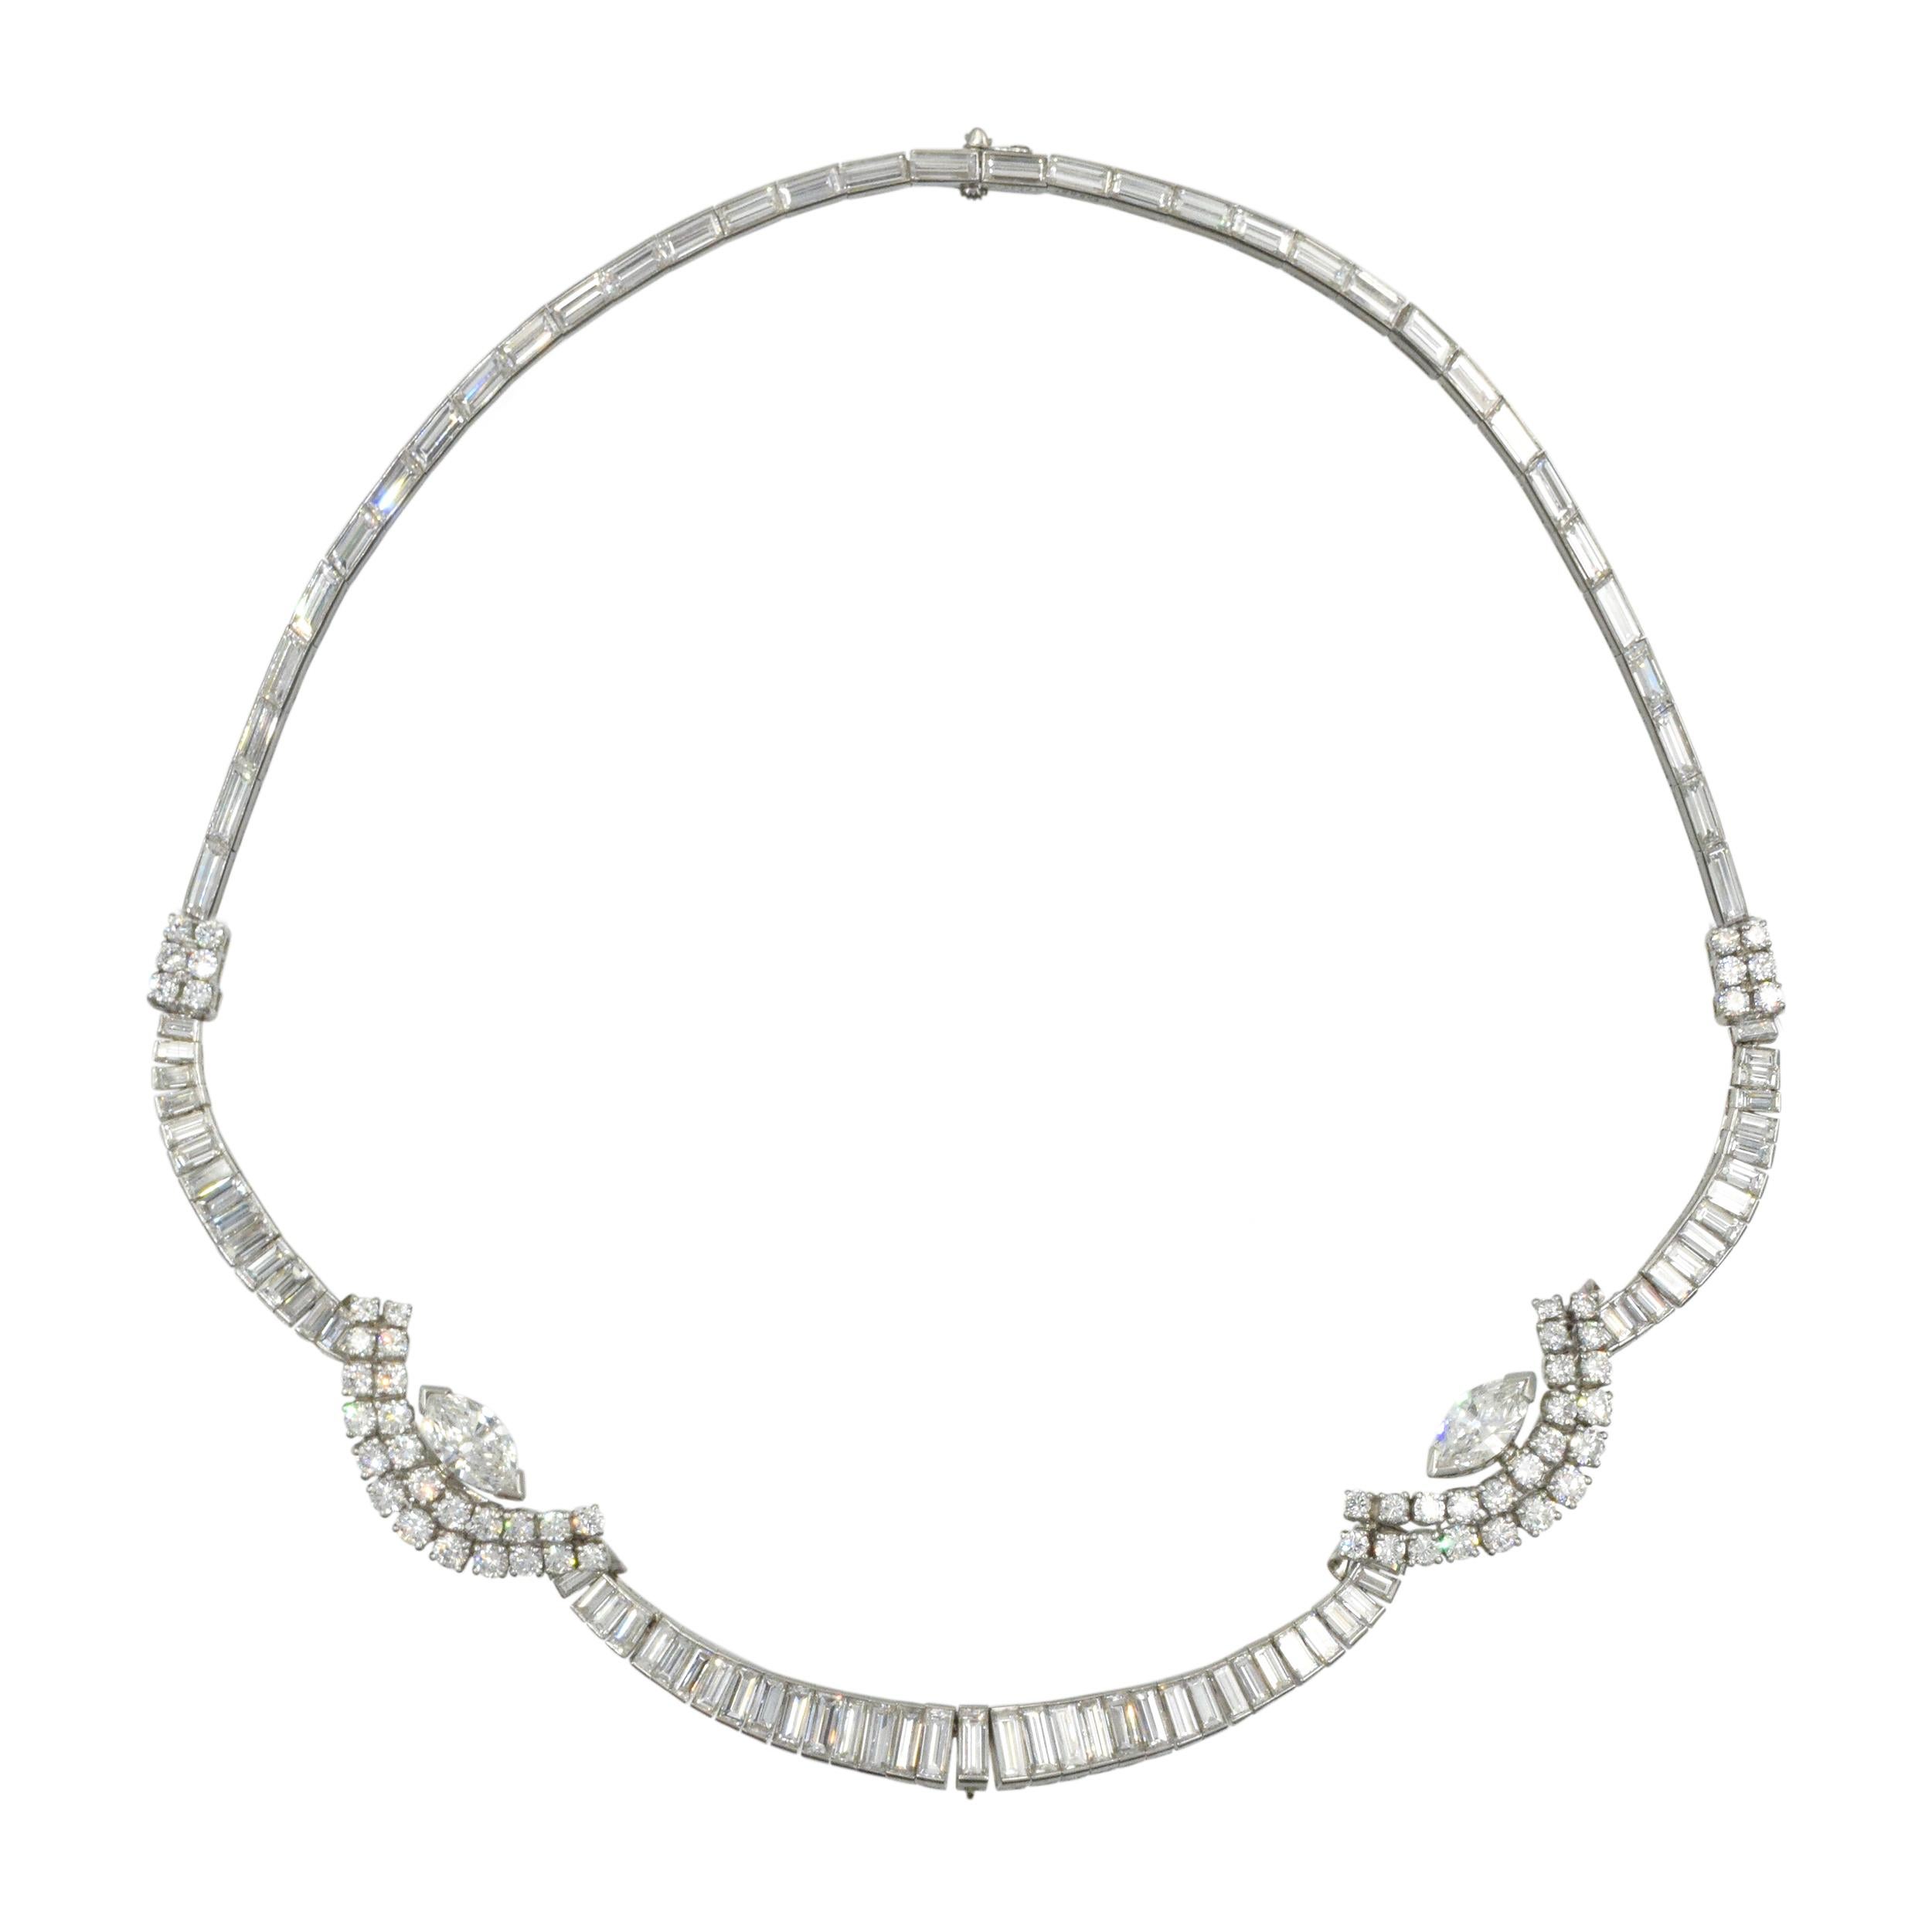 Baguette Cut Oscar Heyman Diamond Necklace